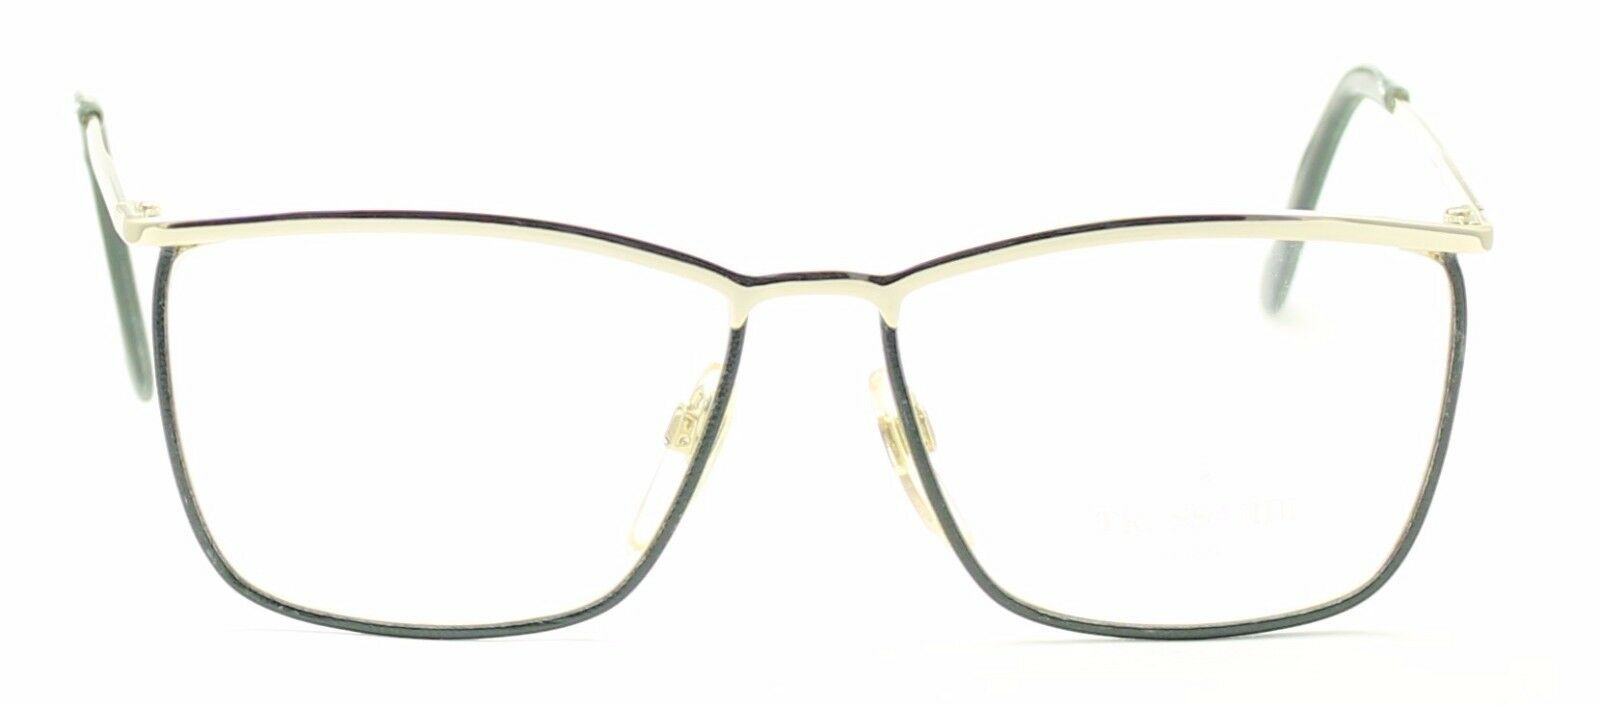 TRUSSARDI TPL 122 COL. 049 RX Optical Eyewear FRAMES Eyeglasses Glasses - Italy